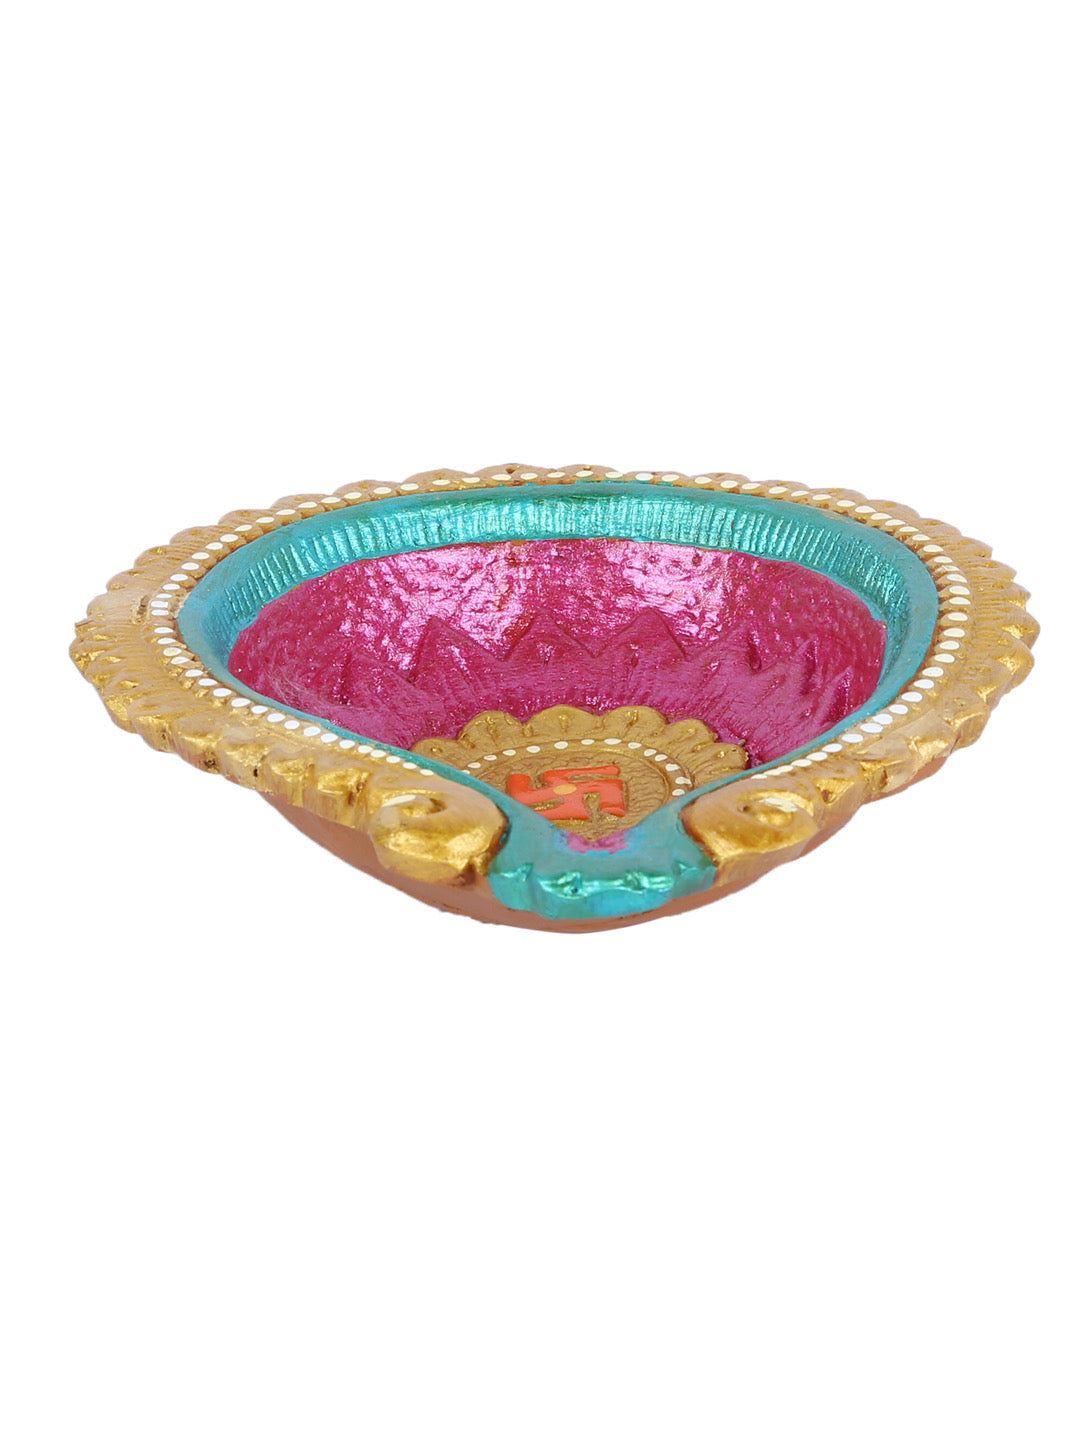 Aapno Rajasthan Multicolor Terracotta Handcrafted Diya for Diwali - 1 pc - Default Title (DD1825)